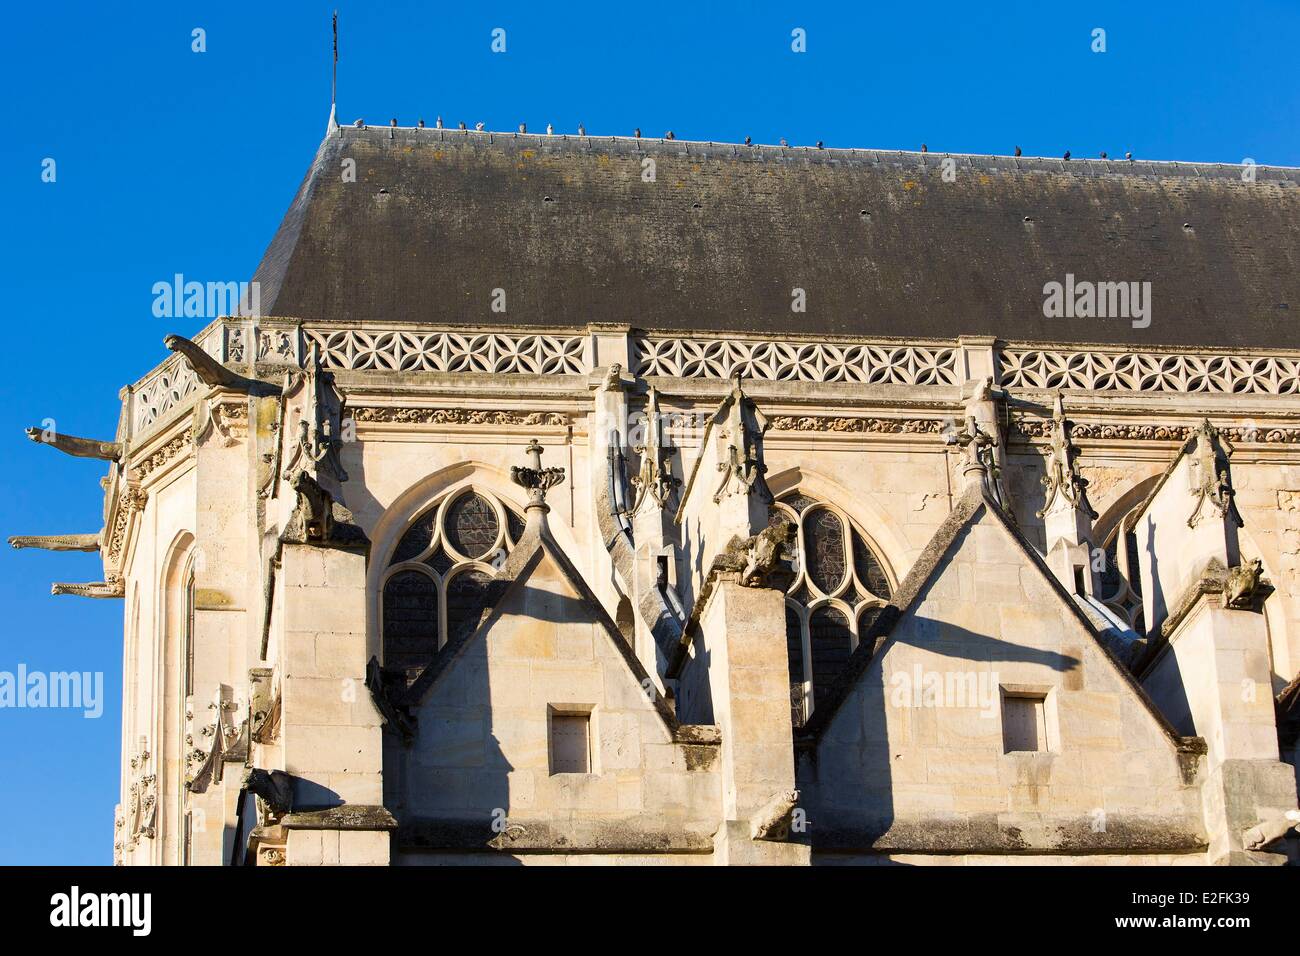 France, Seine et Marne, Melun, facade of 16th century St Aspais church in flamboyant gothic style Stock Photo